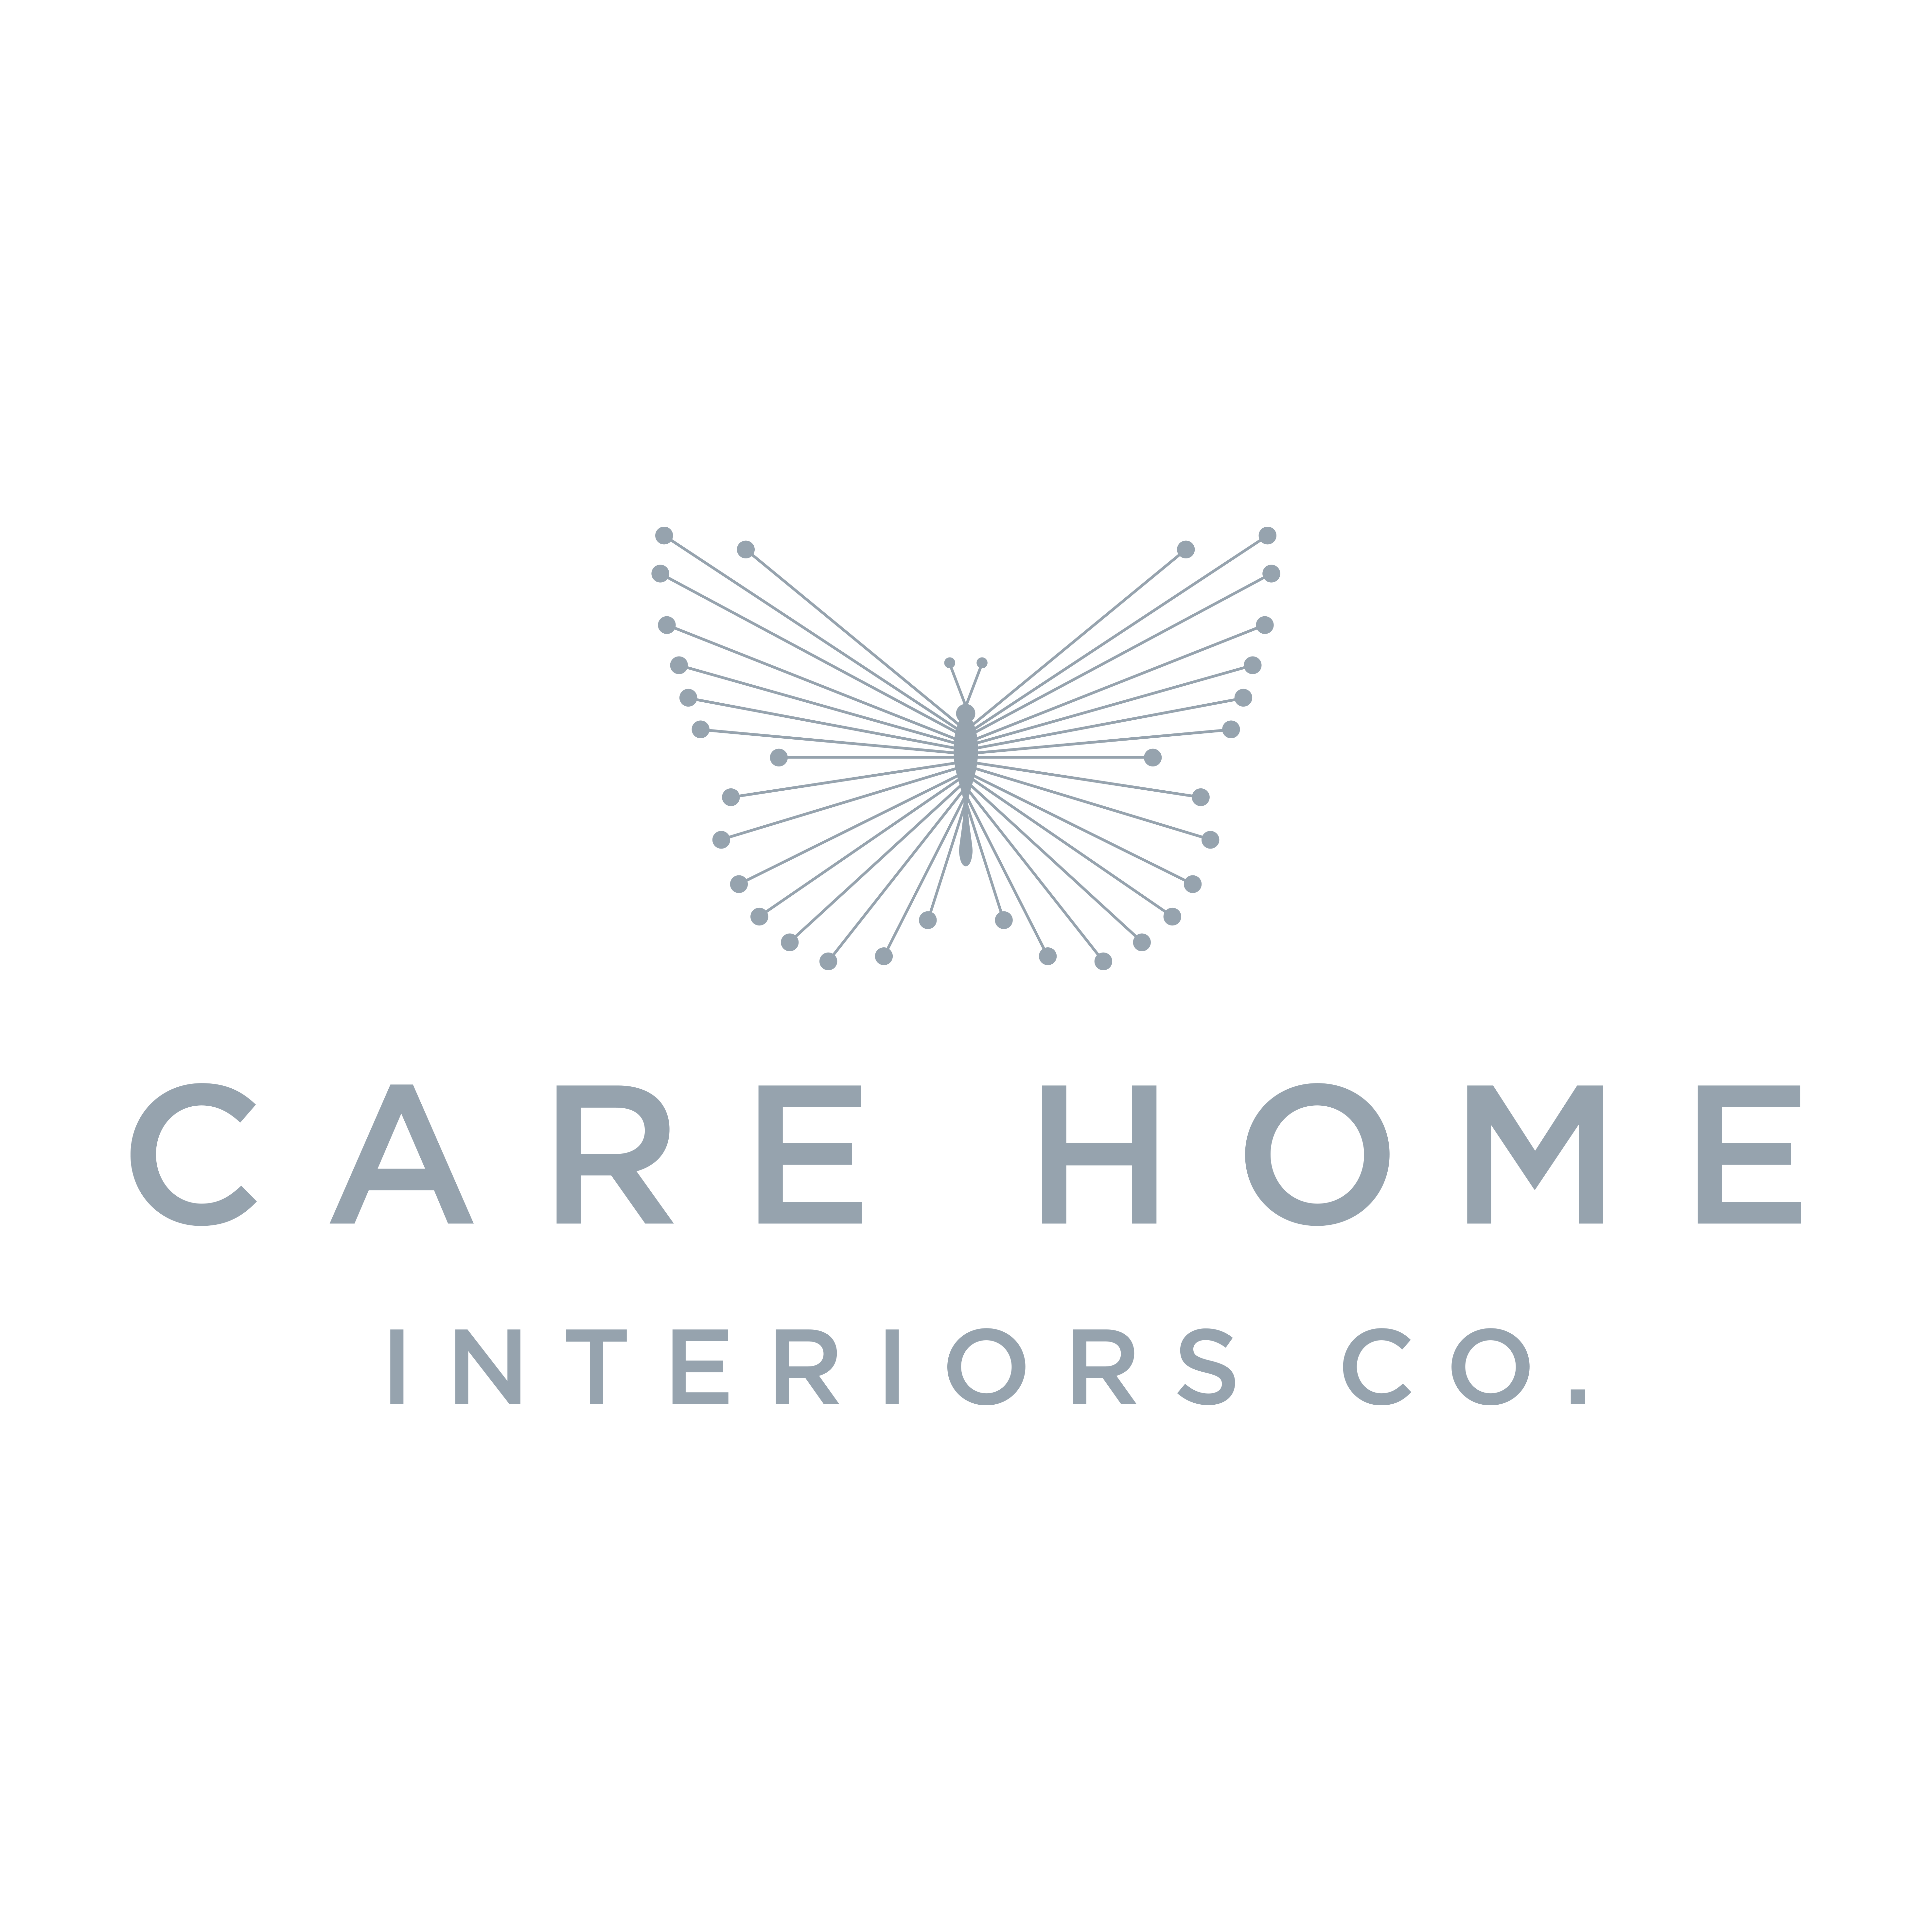 The Care Home Interiors Company